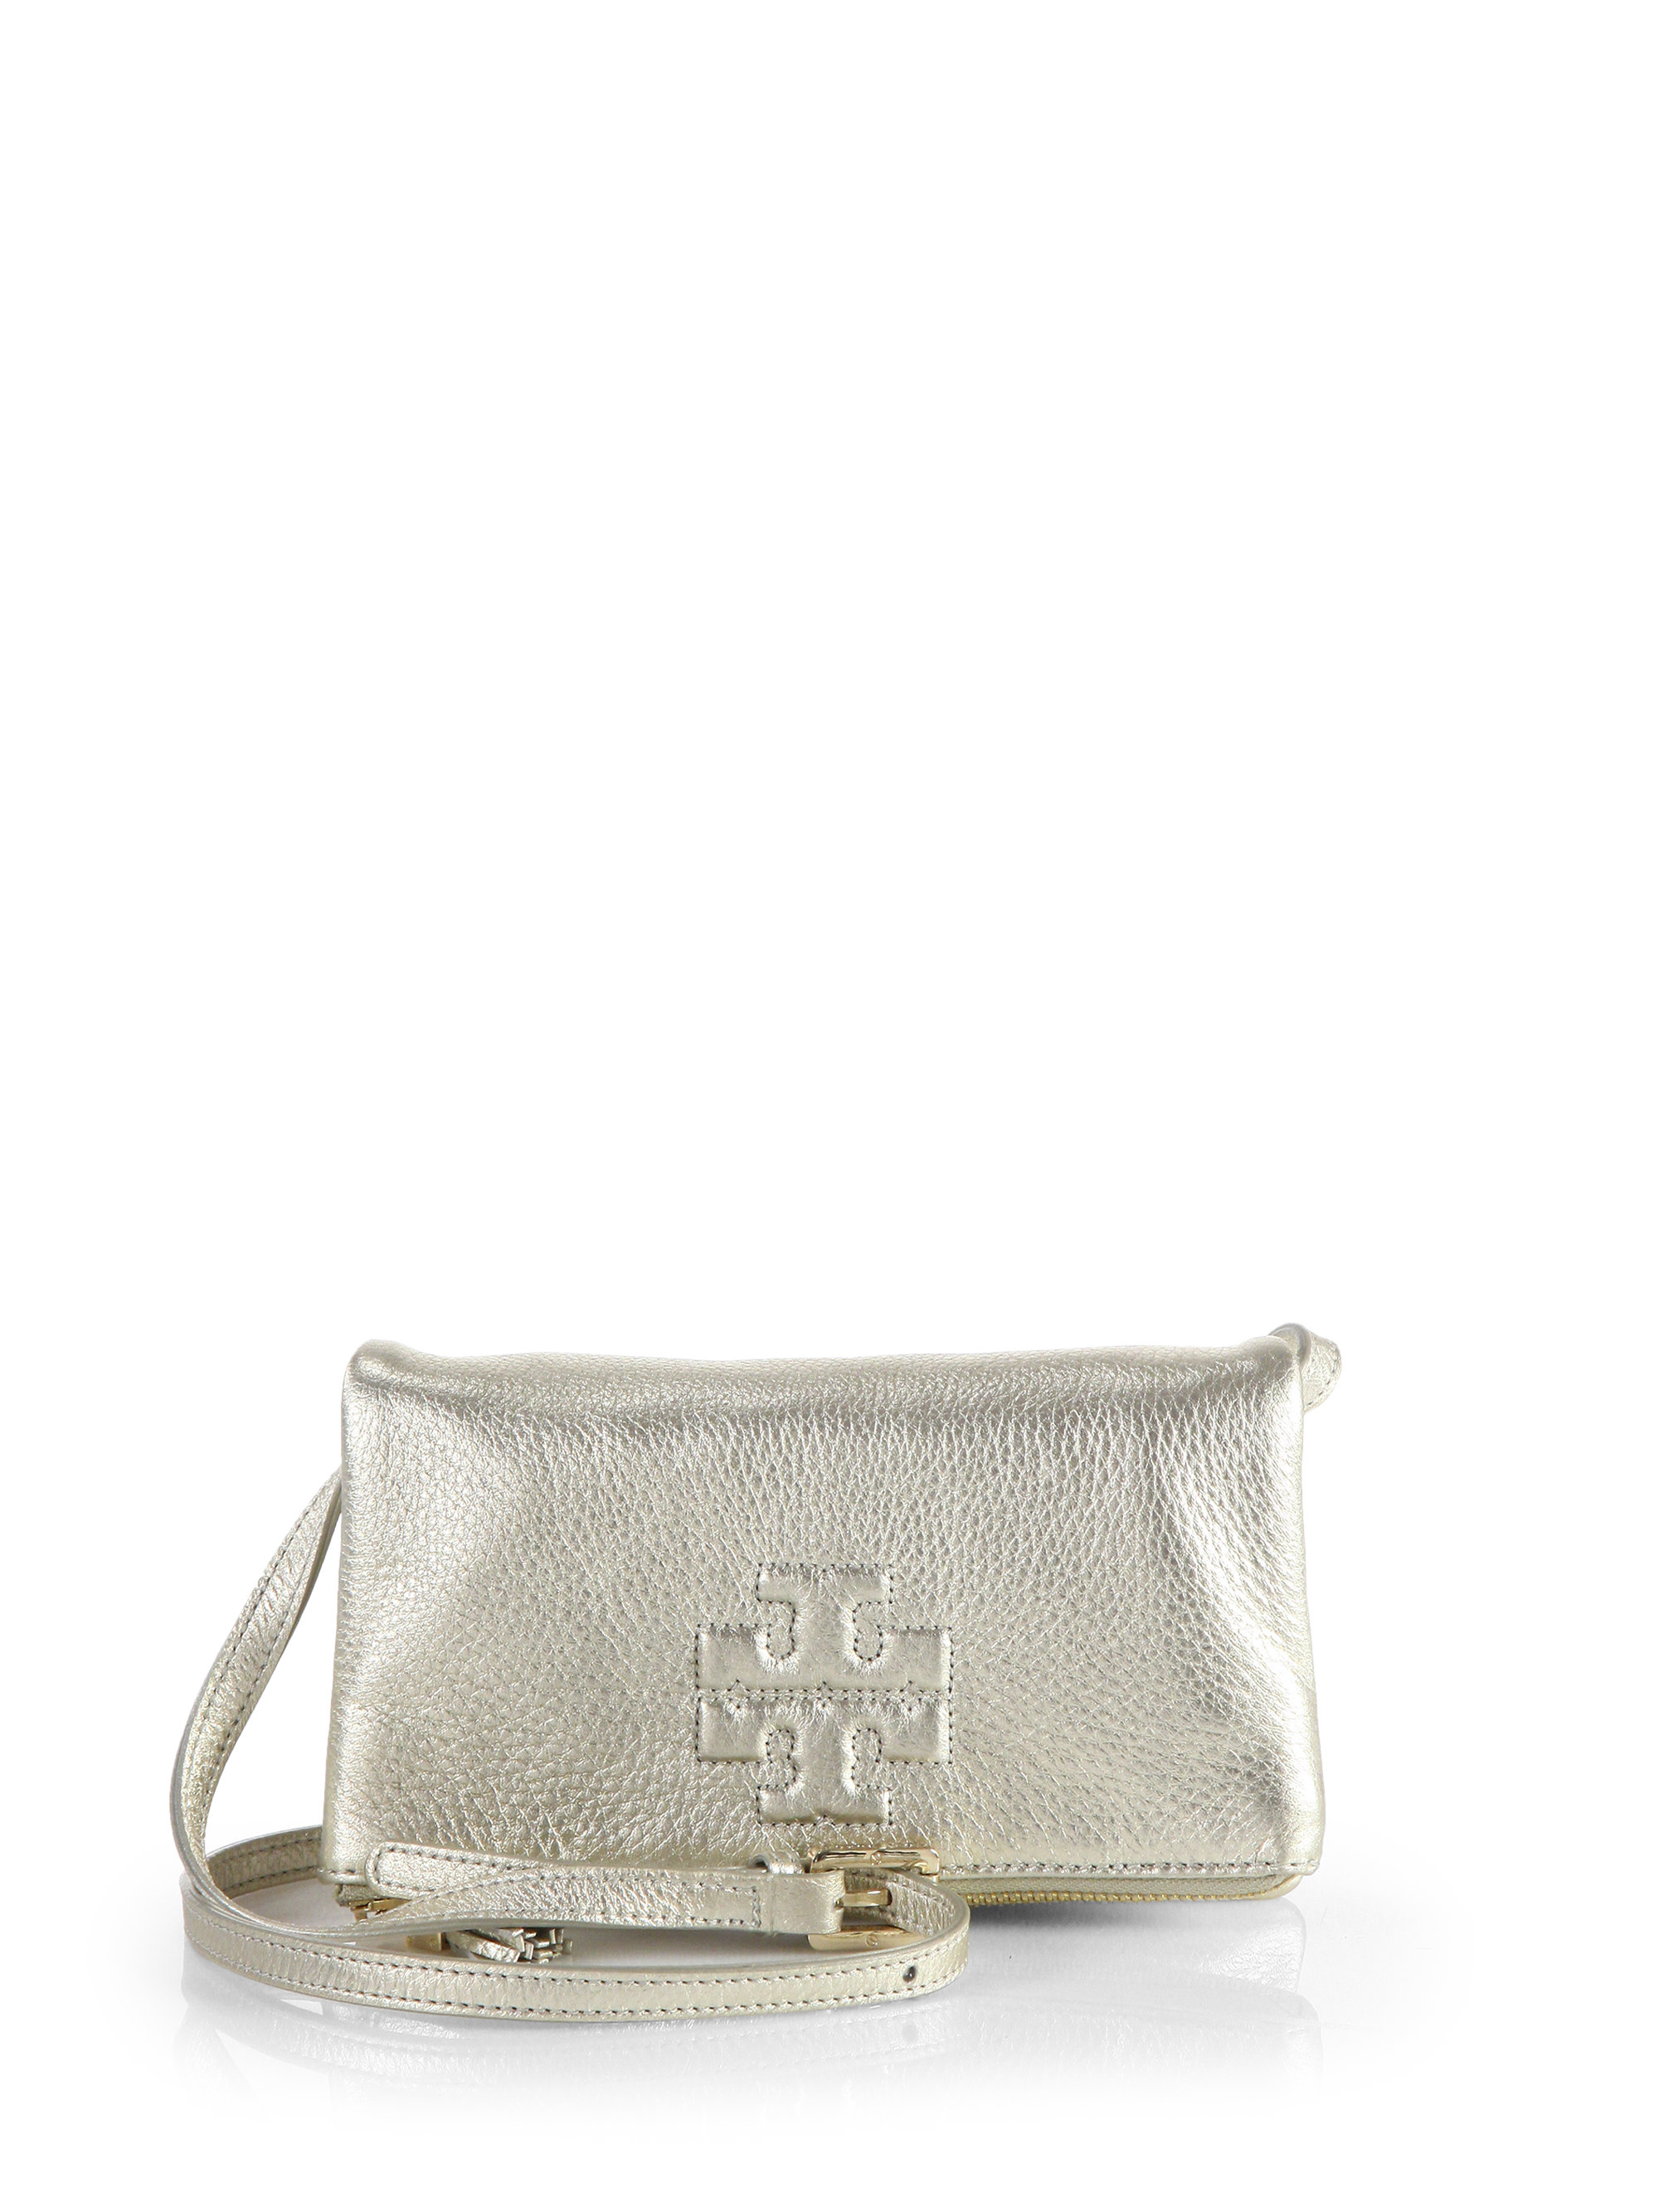 Tory Burch Foldover Metallic Leather Crossbody Bag in Silver (LIGHT GOLD) | Lyst